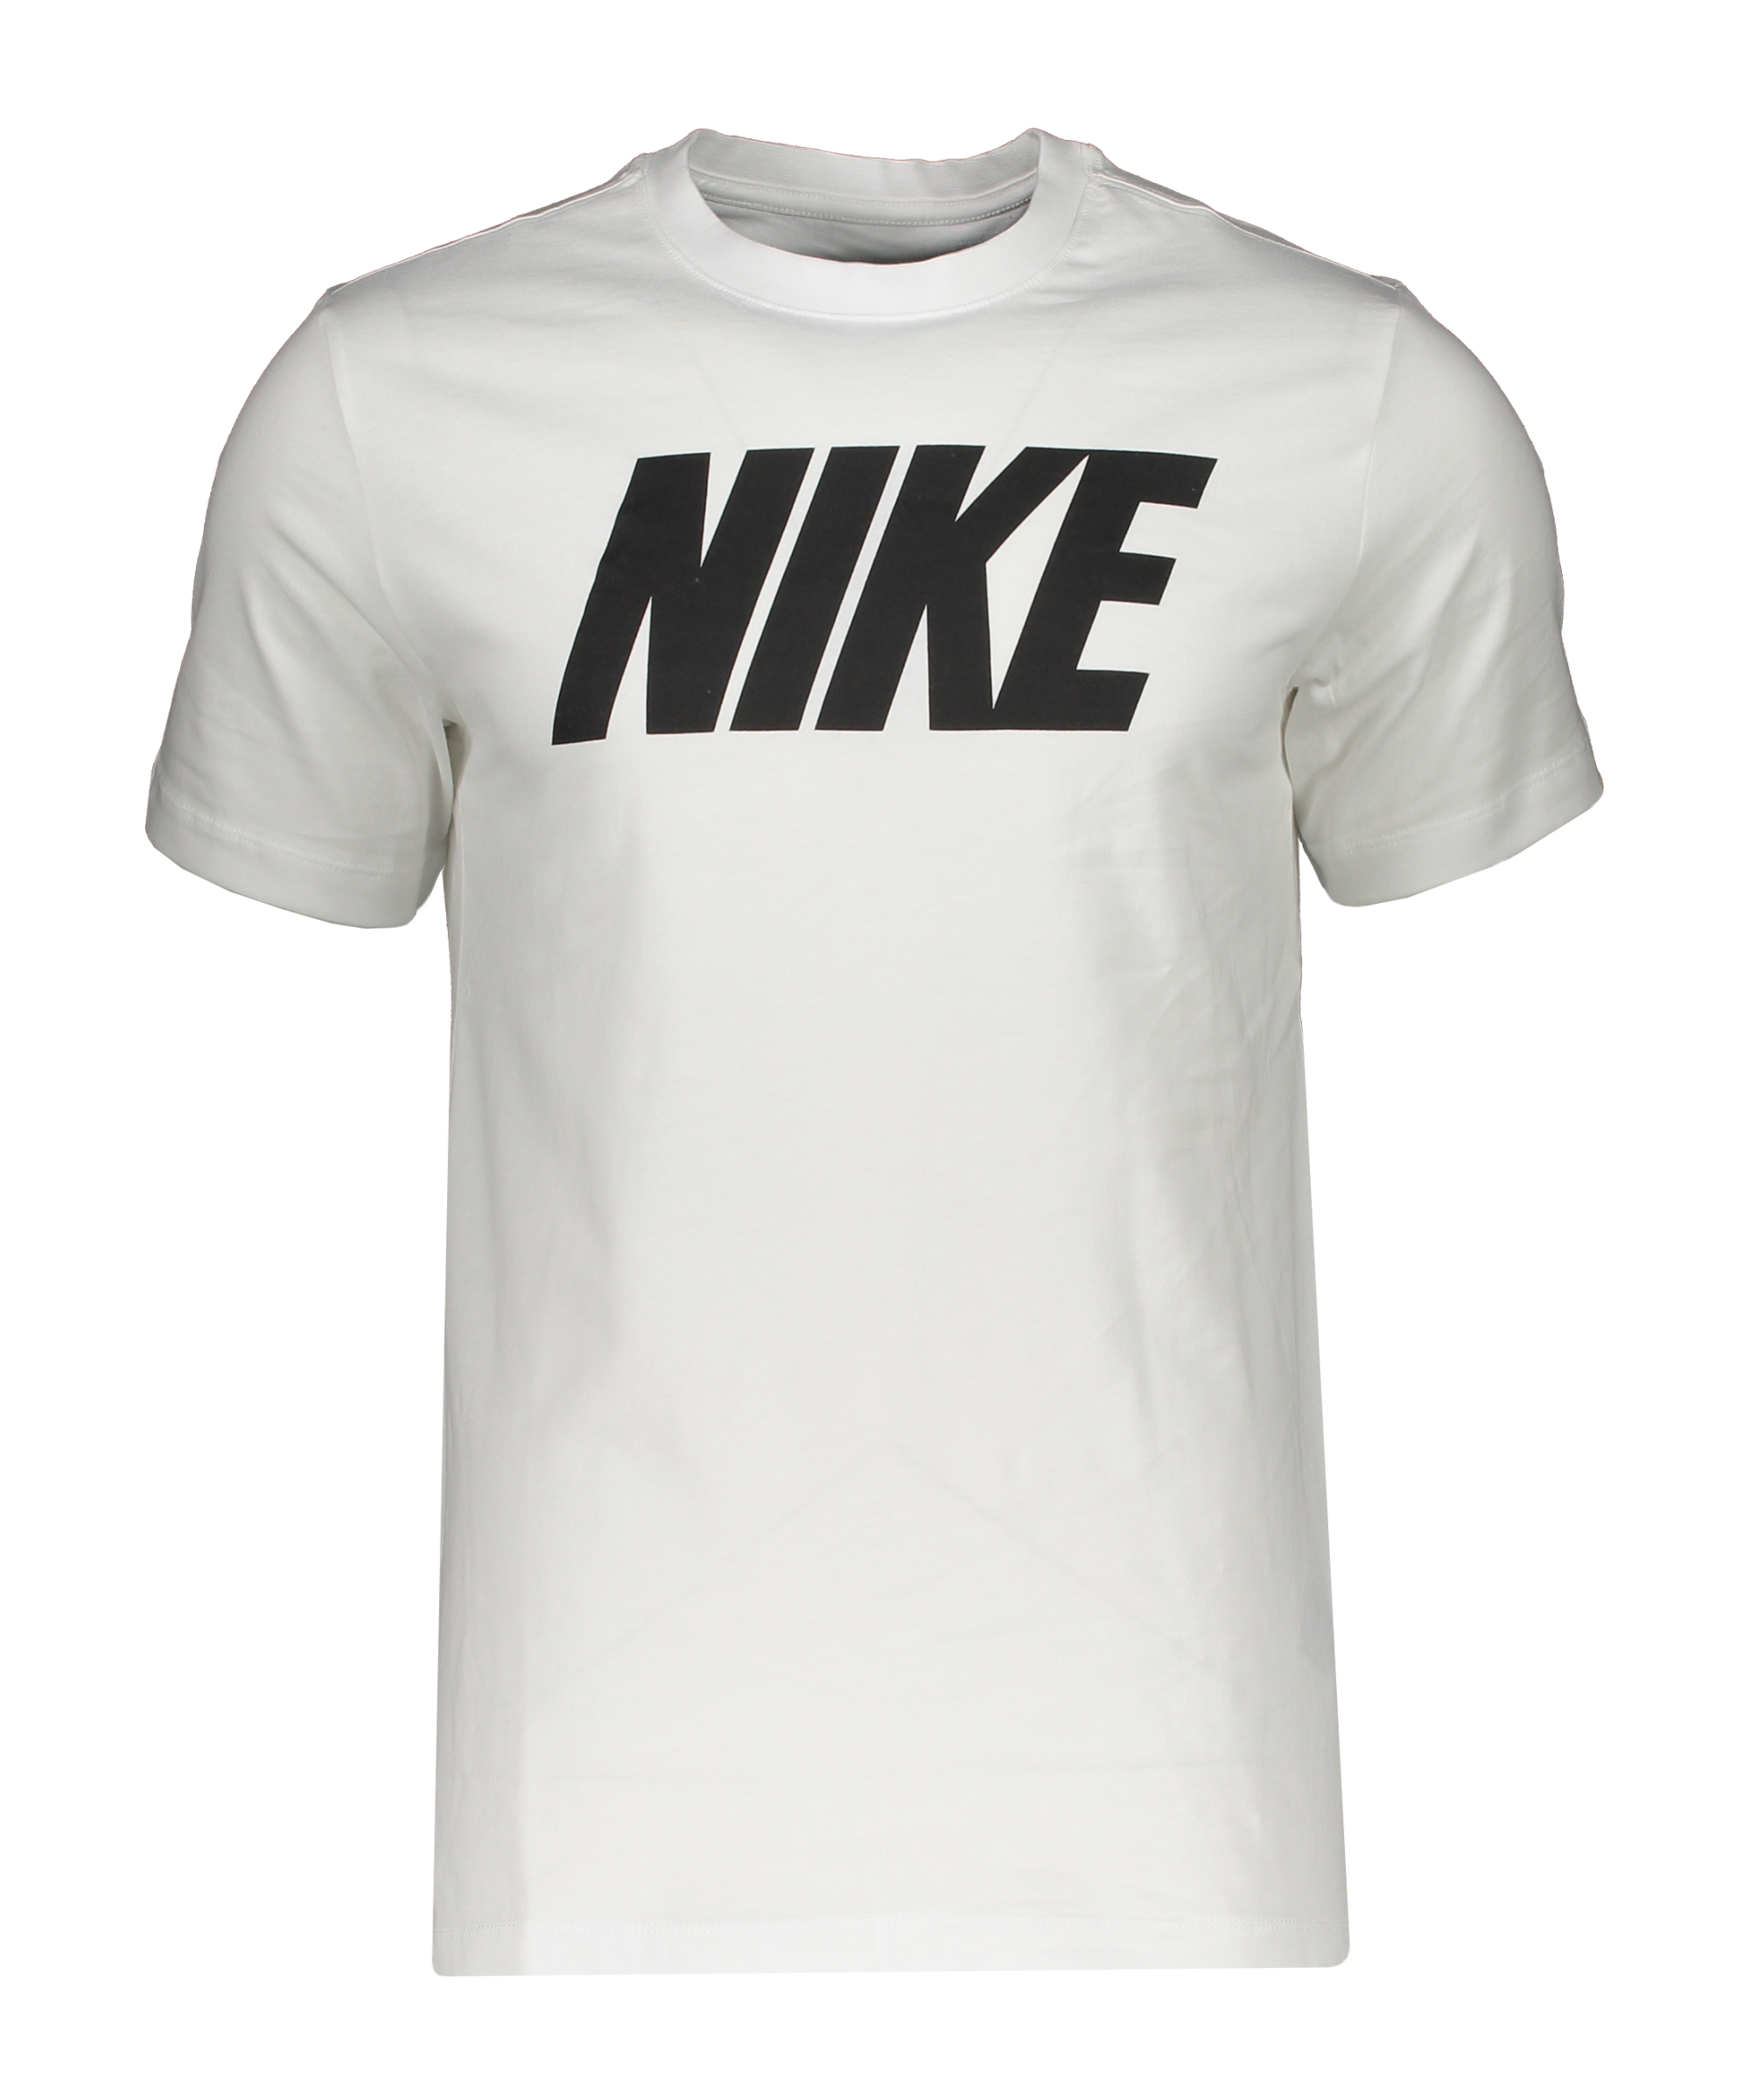 Savvy Mission exaggerate Nike Icon Block T-Shirt - Black